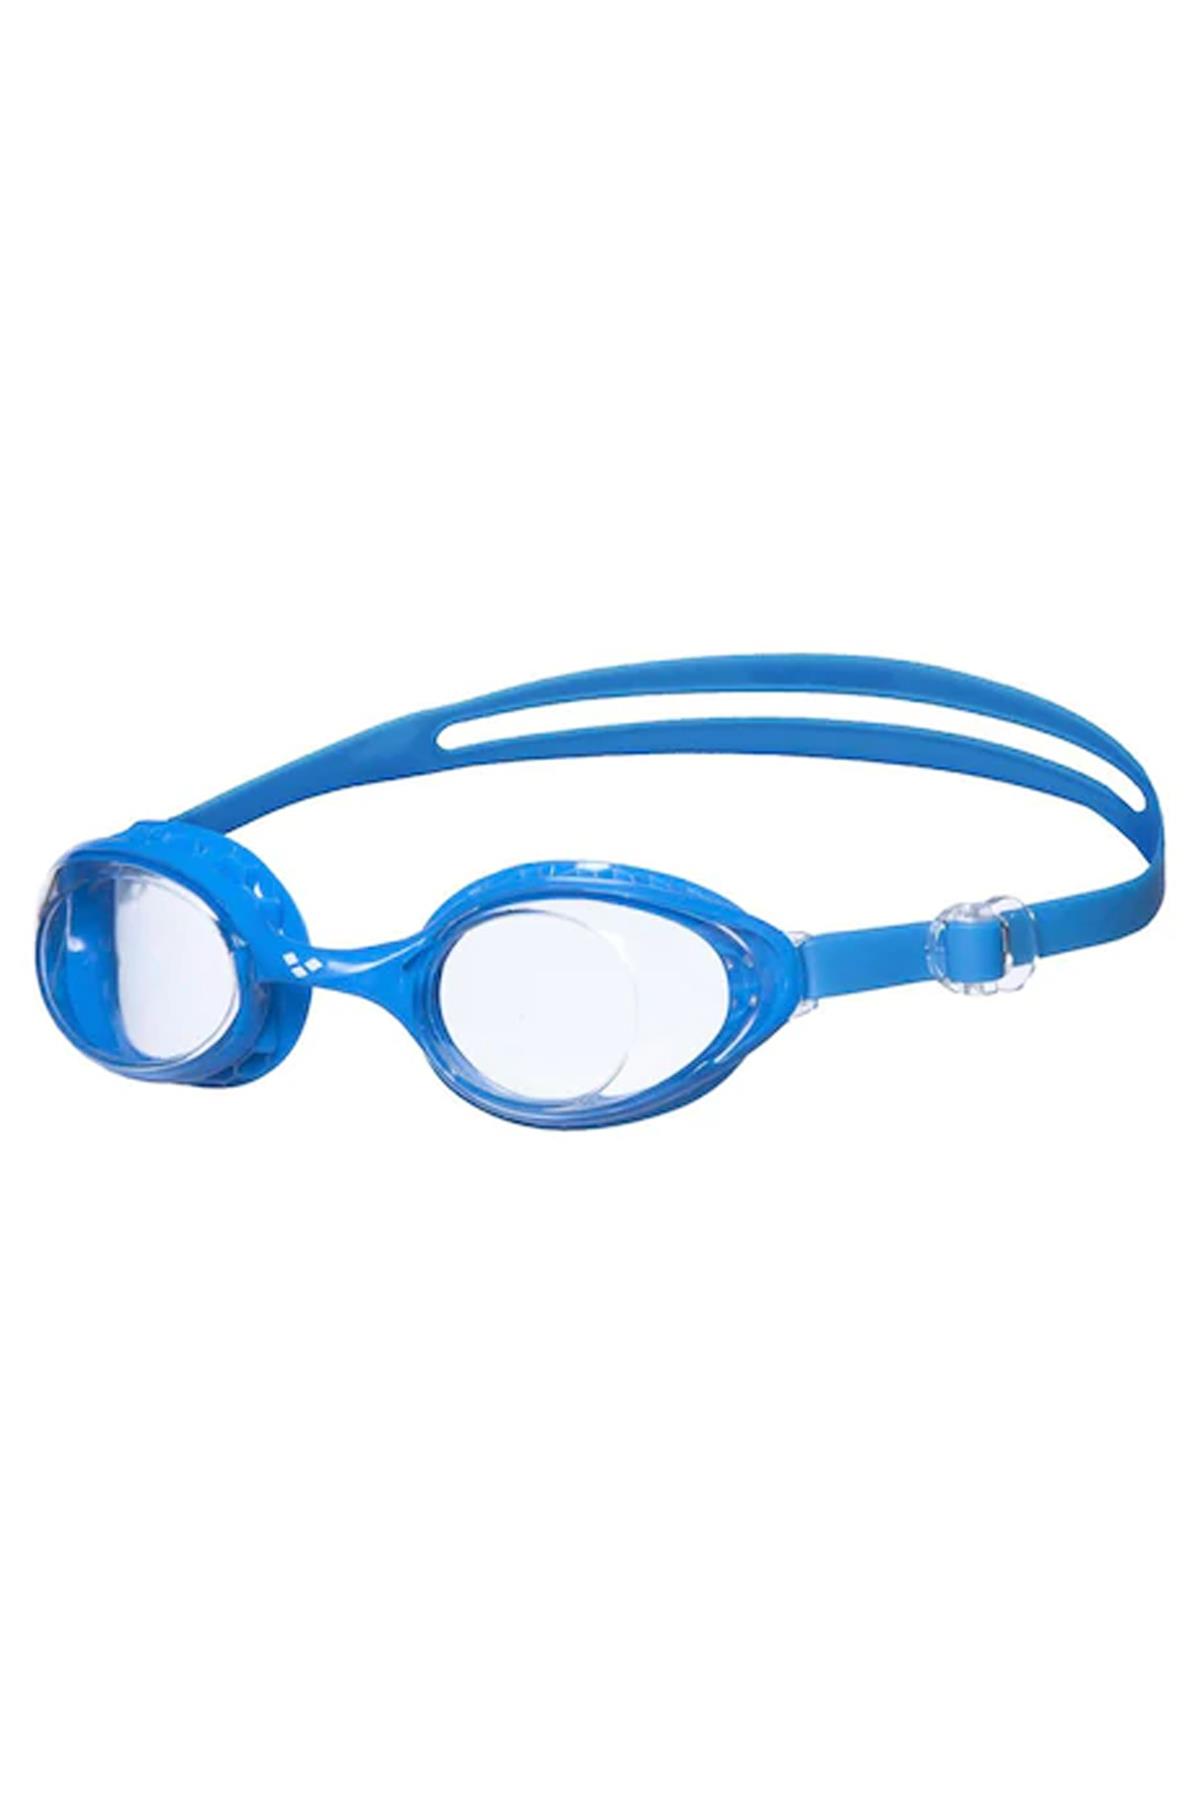 ARENA Arena Air-Soft Yüzücü Gözlüğü Mavi (003149-170)